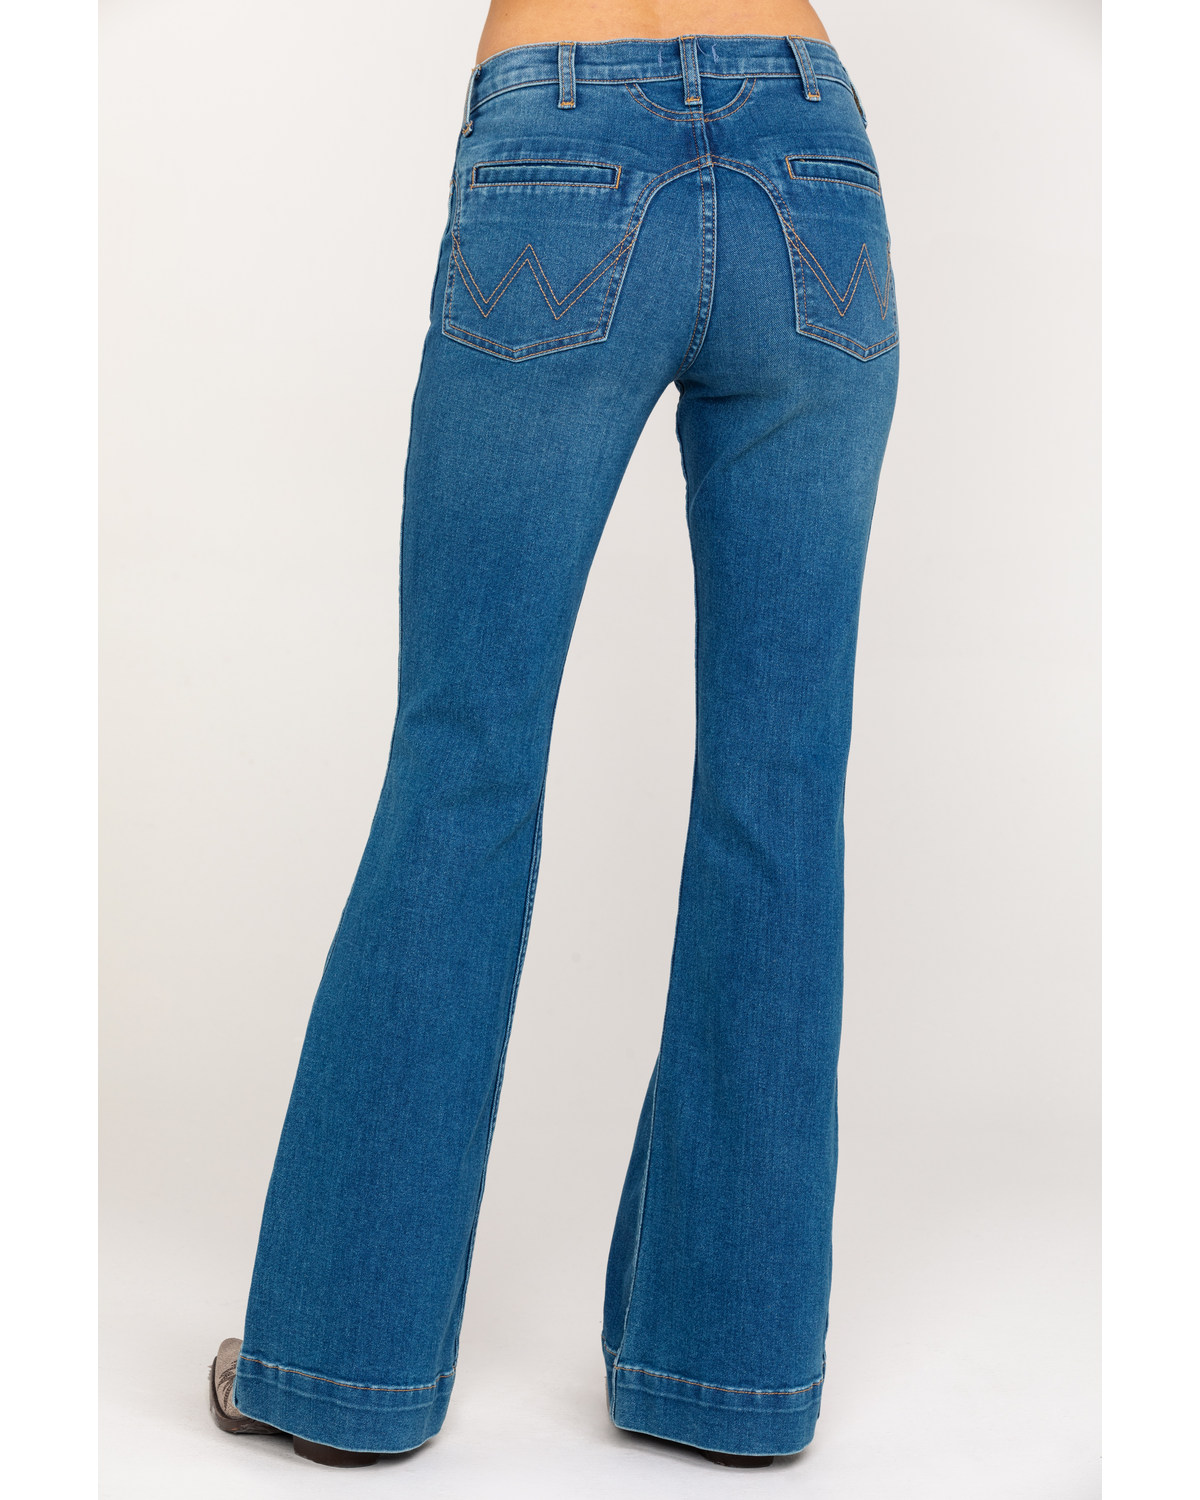 Buy > khaki colored jeans > in stock